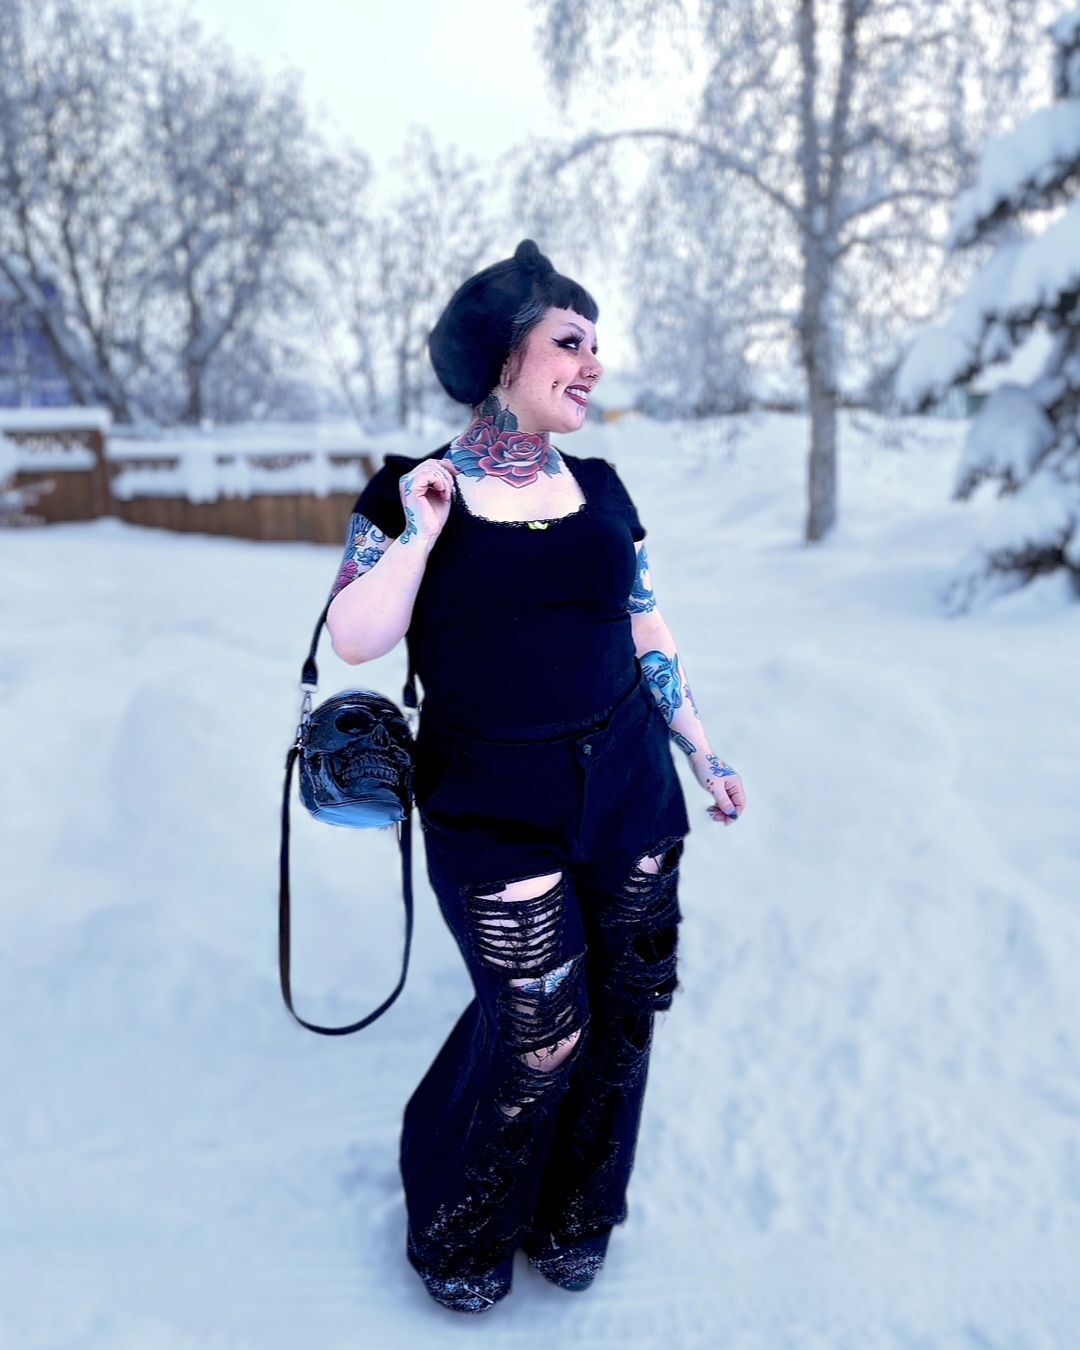 Today was -16°F but my outfit is so cute.
Pants & purse from @shasilo_clothing 🫶🏻

#shasilo #shasiloswirl #pinup #alternativefashion #altclothing #Alaskan #Alaska #alaskanative #alaskawinter #coldashell #skullpurse #gothclothing #gothaesthetic #inkedwomen